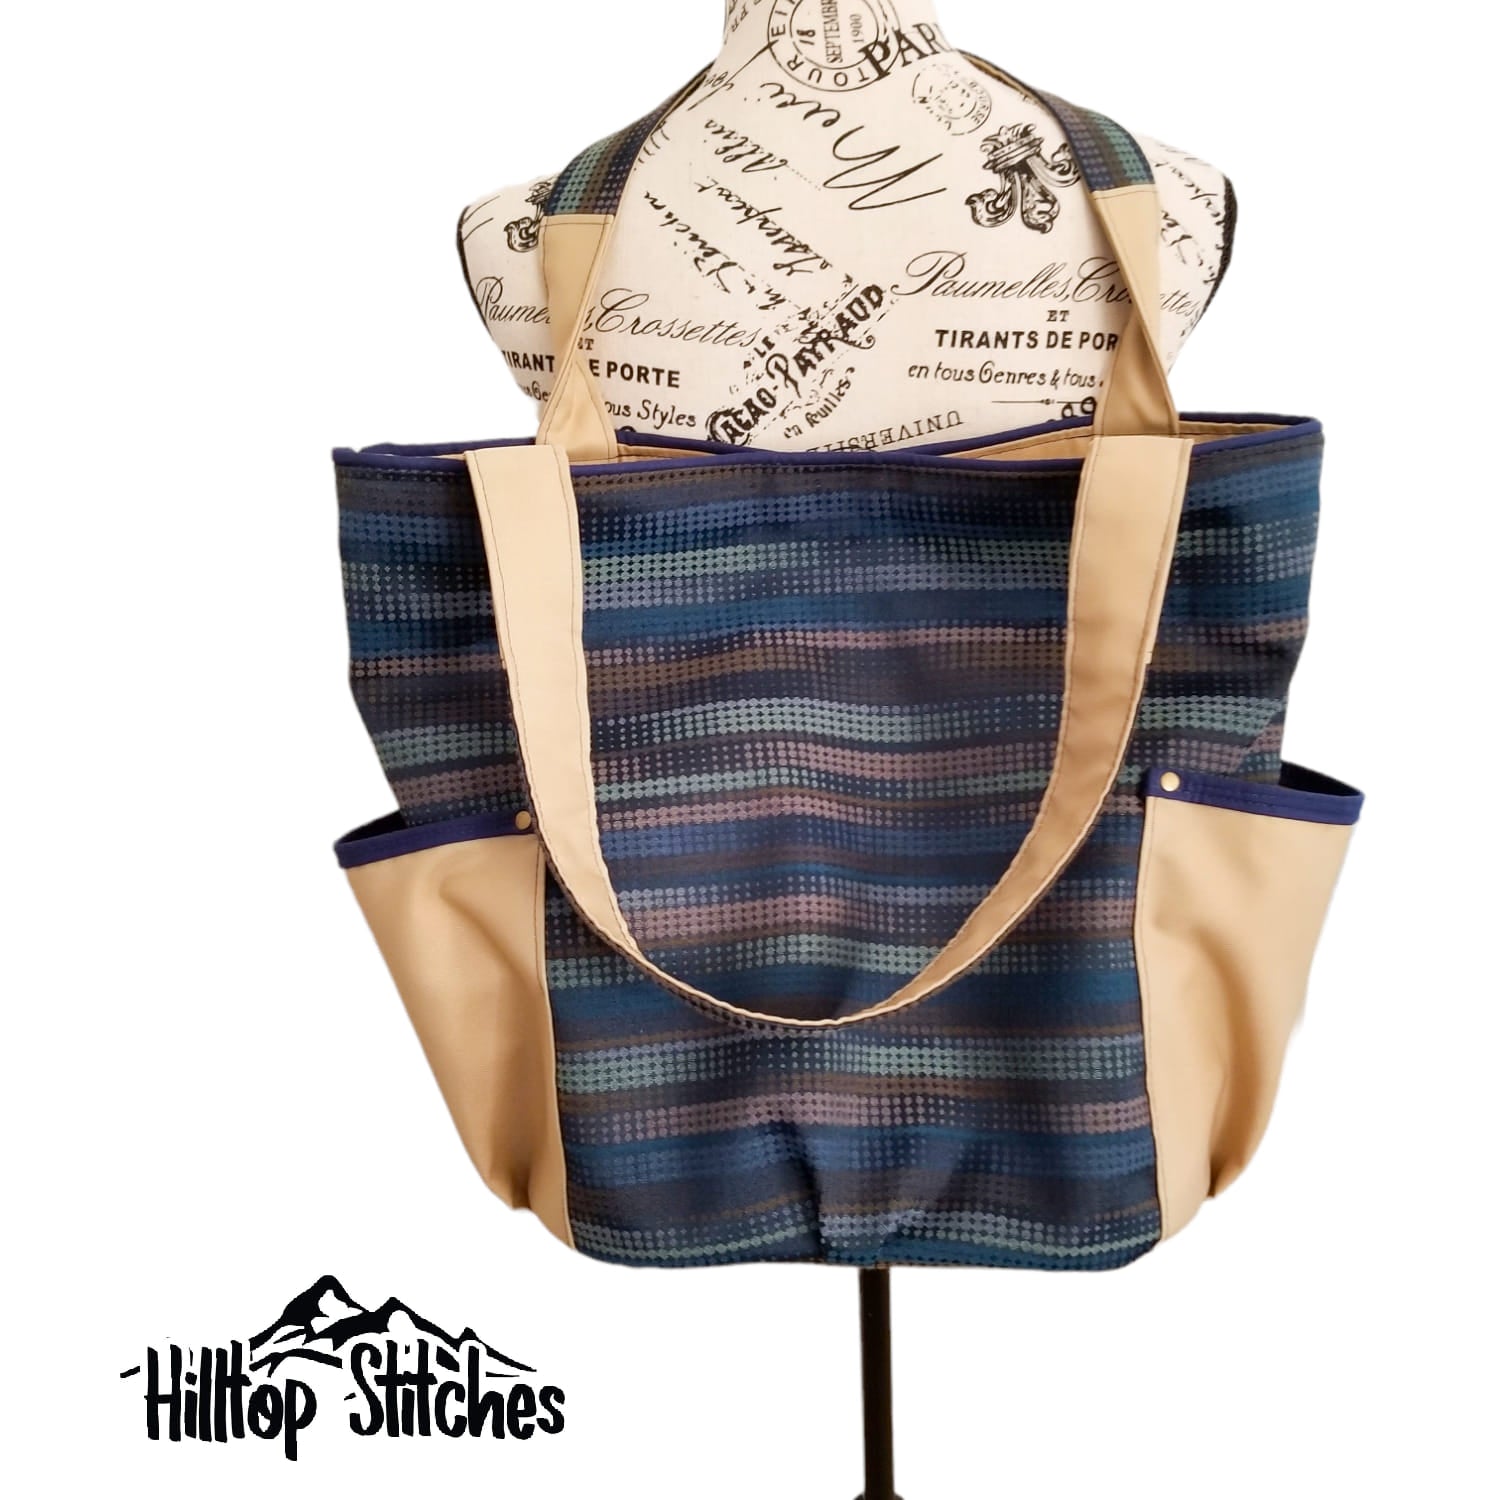 Charley Slouchy Bucket Bag (PDF Pattern w/Video Tutorial) – K.dill Handmade